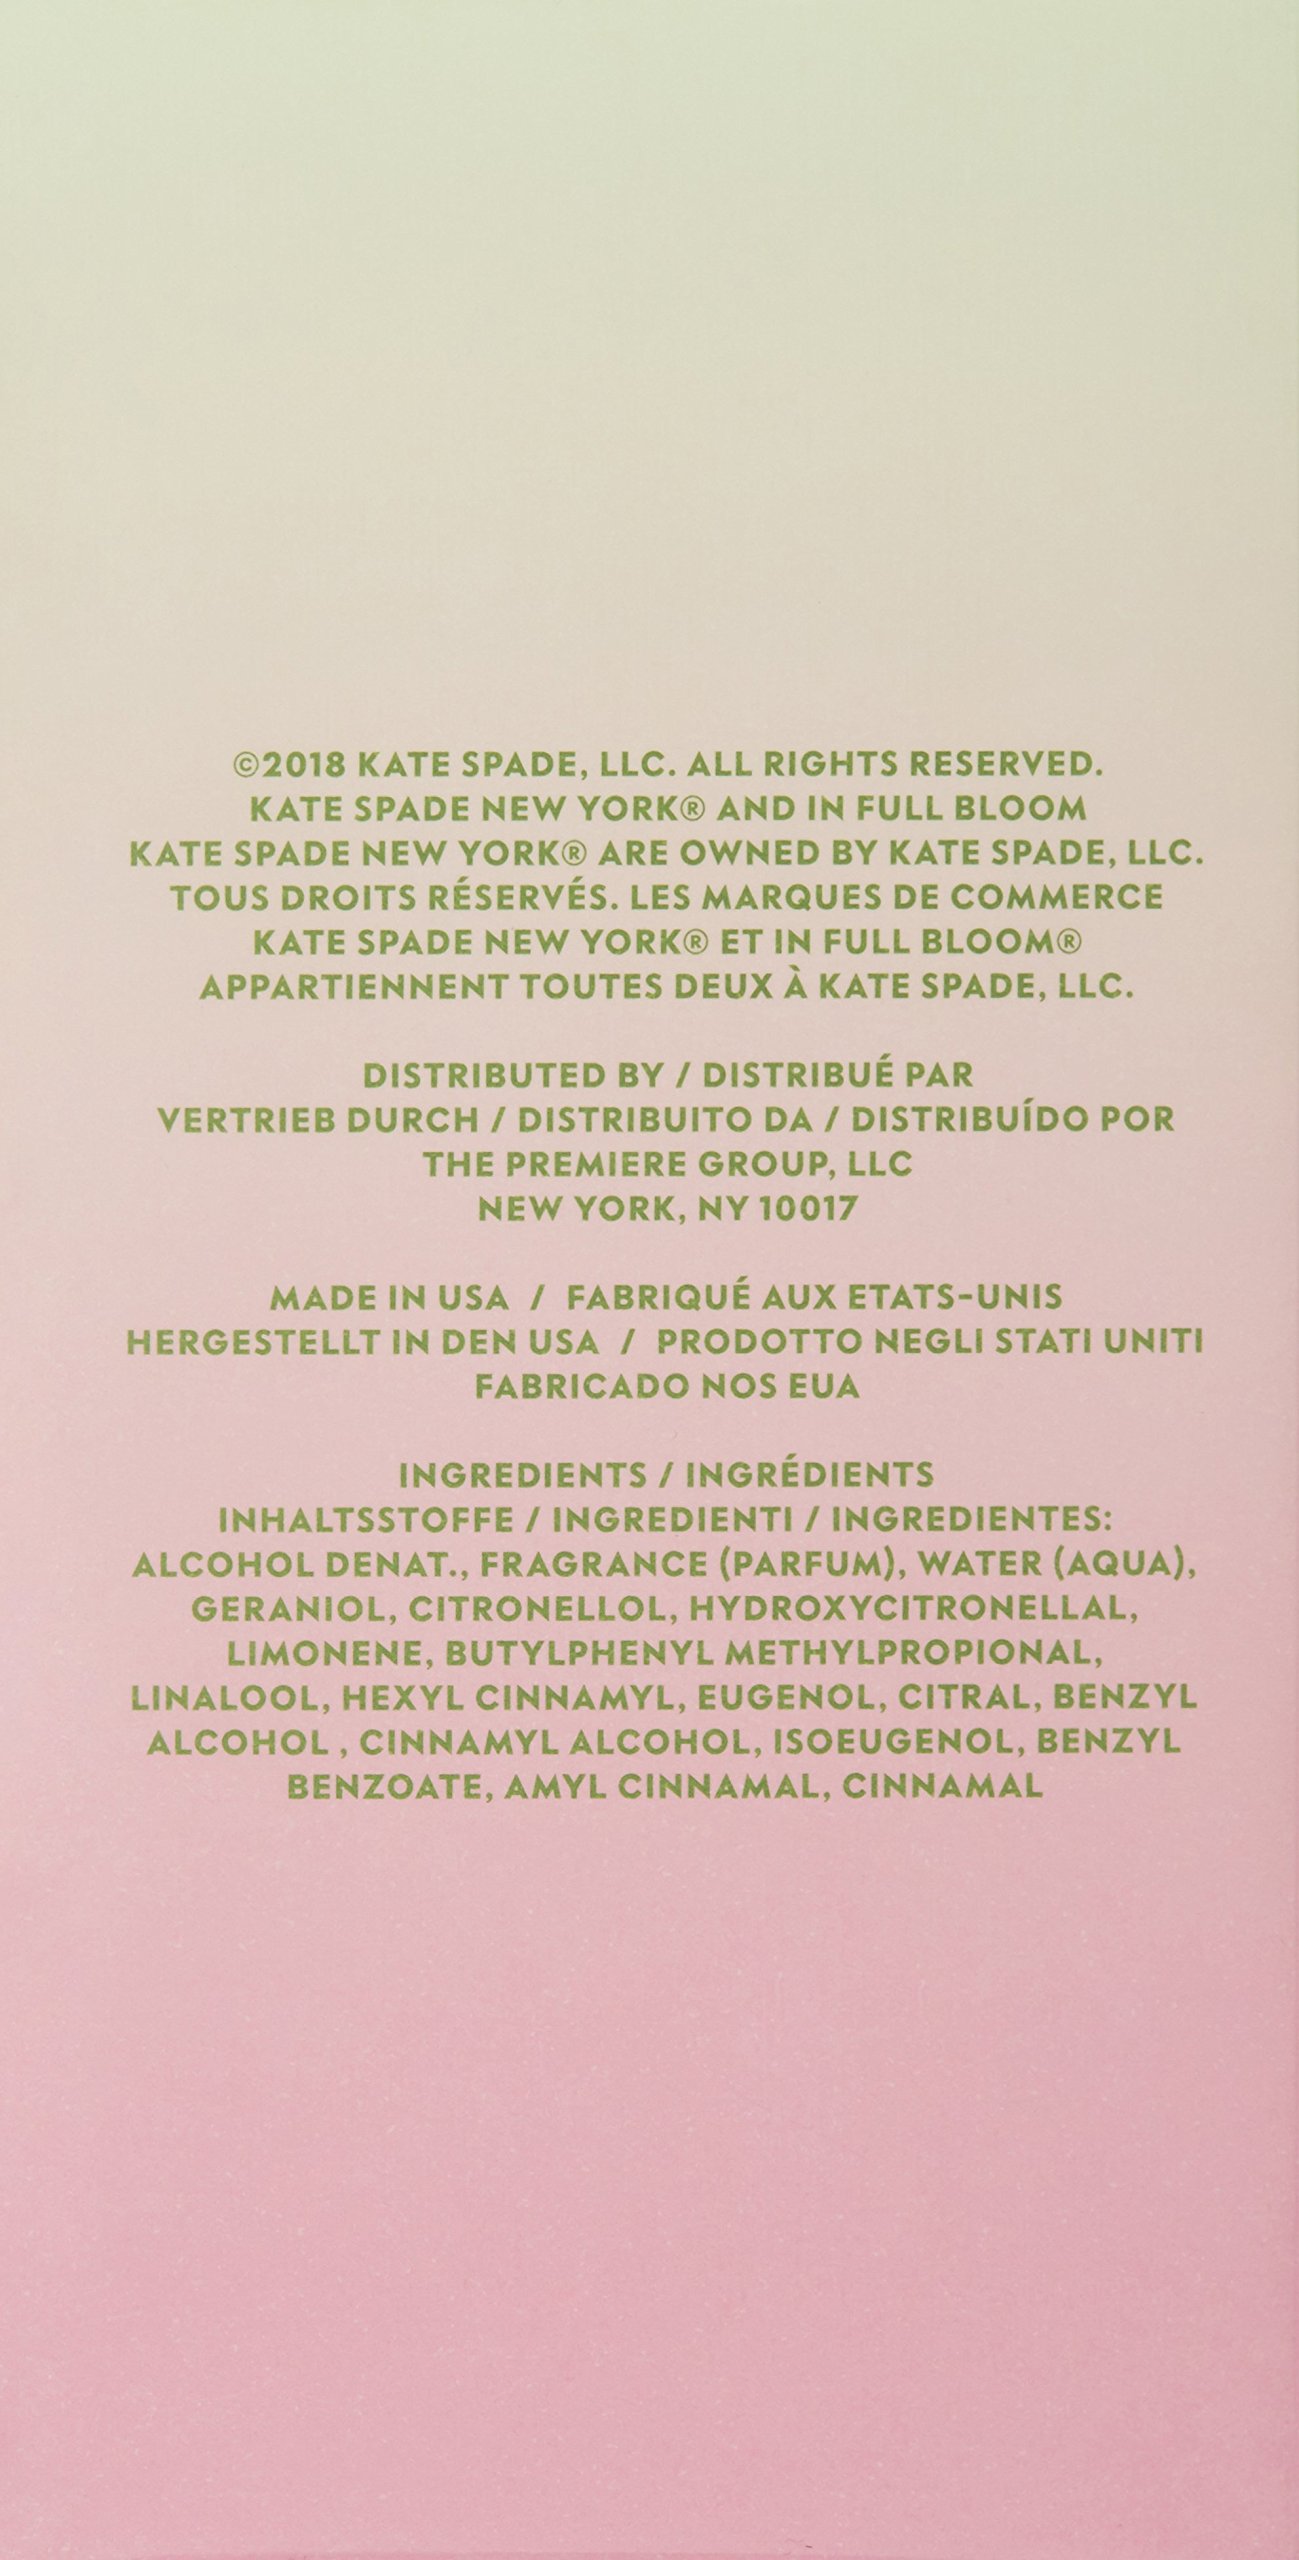 Mua Kate Spade In Full Bloom Eau de Parfum Spray Womens Perfume,  oz  trên Amazon Mỹ chính hãng 2023 | Fado